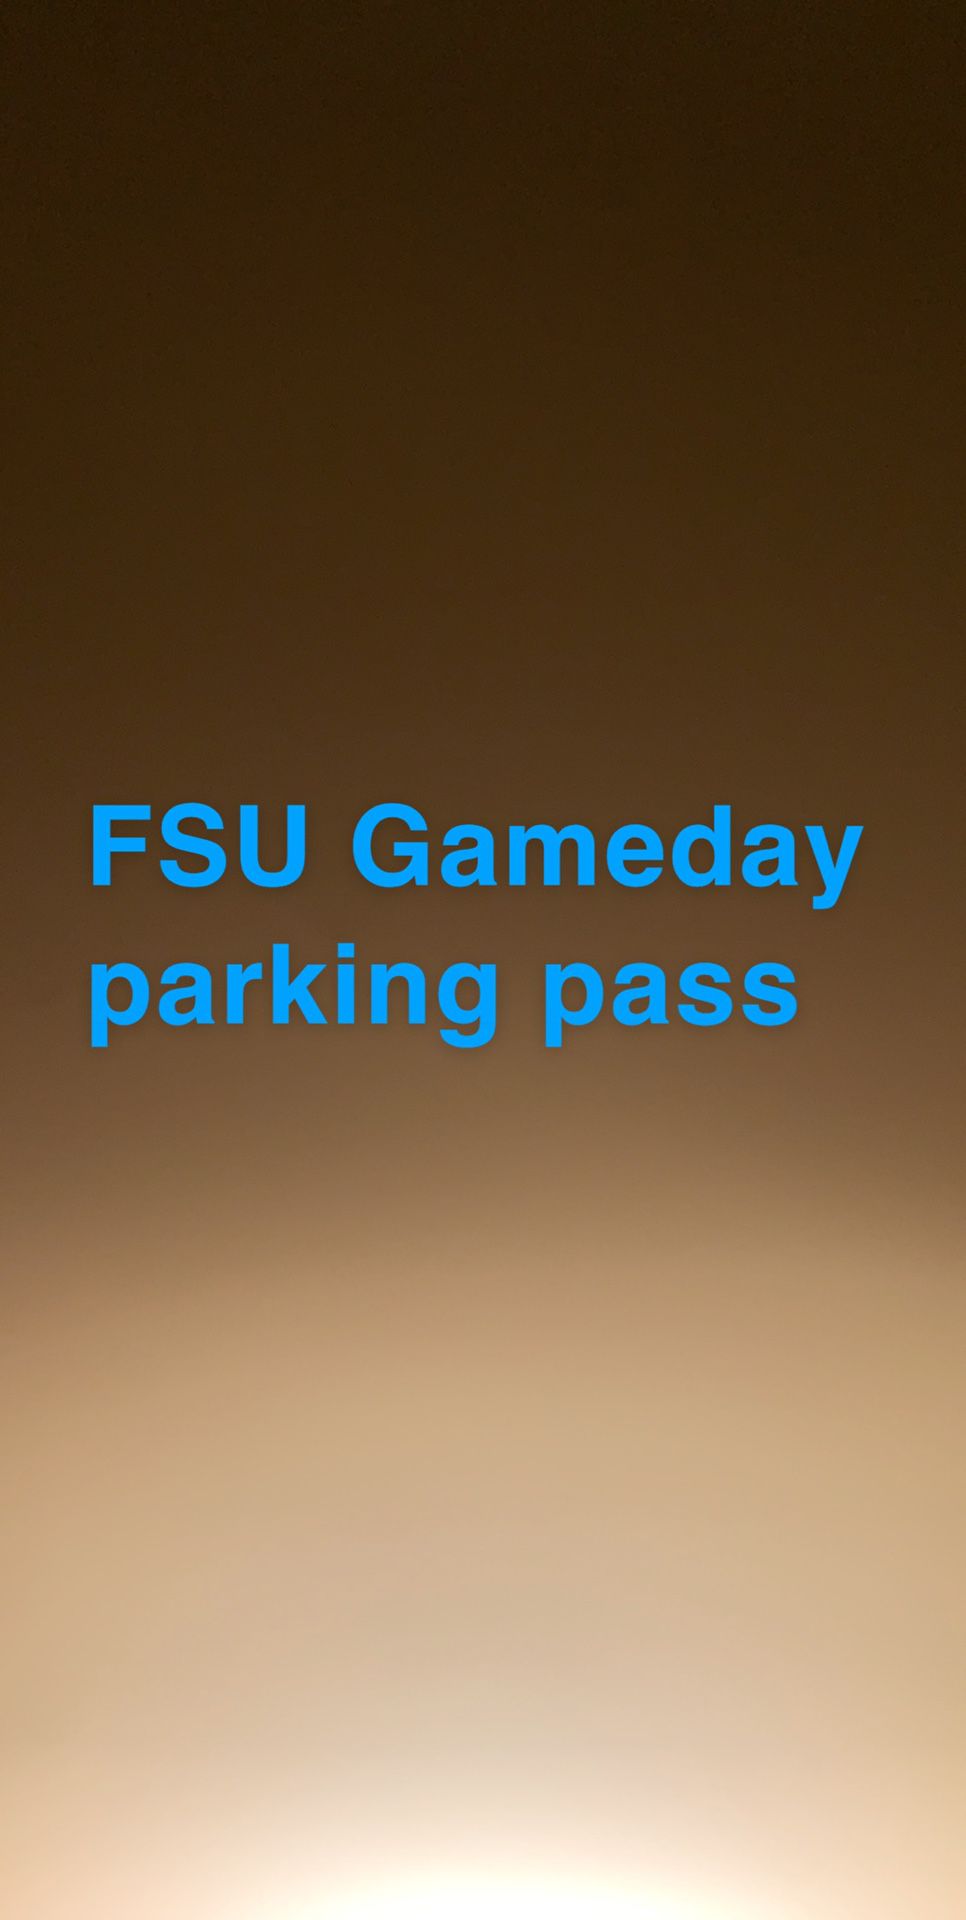 Gameday parking make a offer